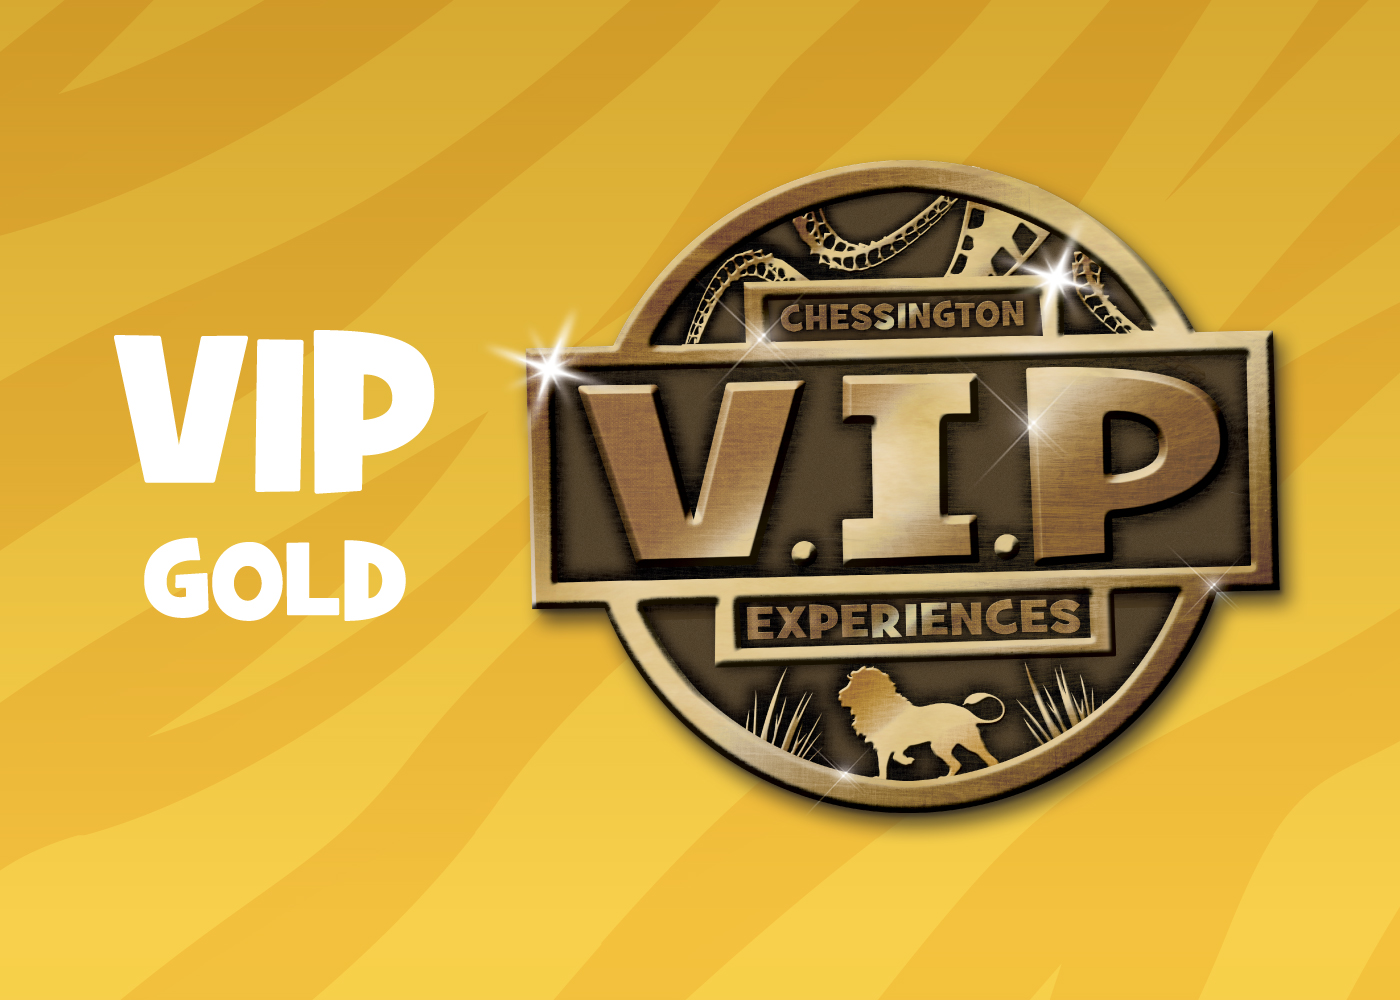 CW23 265 VIP GOLD WEBSITE